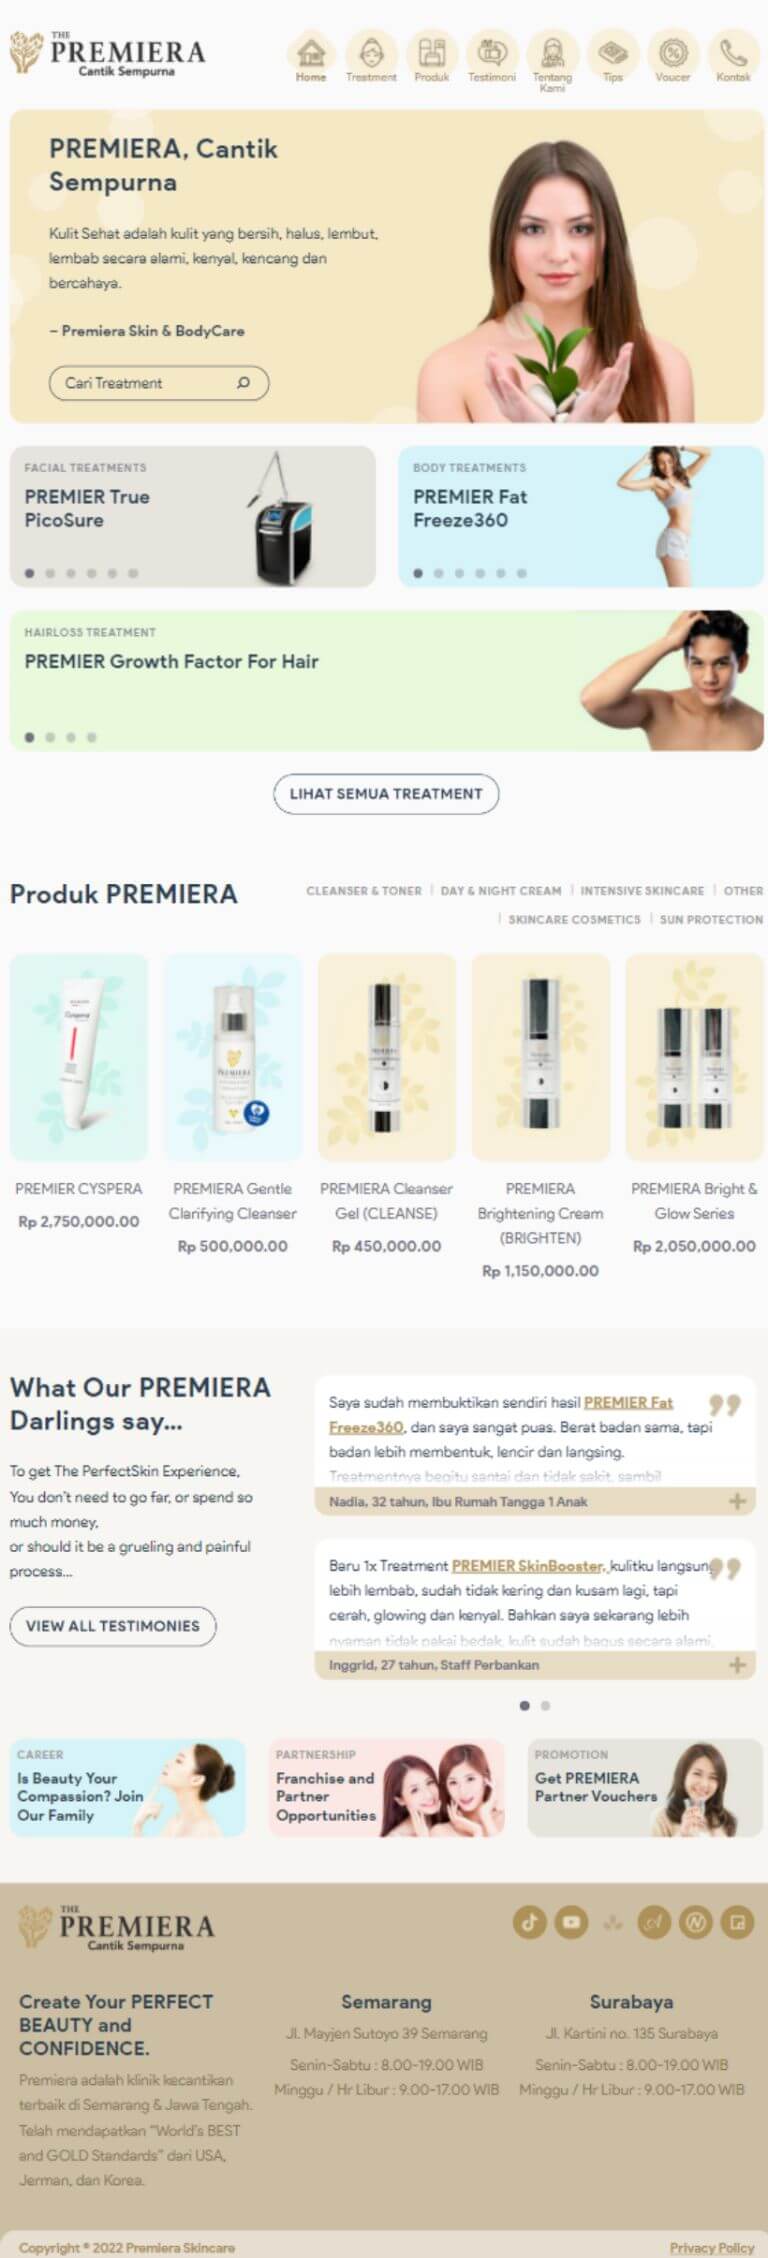 Premiera Skincare Tablet Website Screenshot